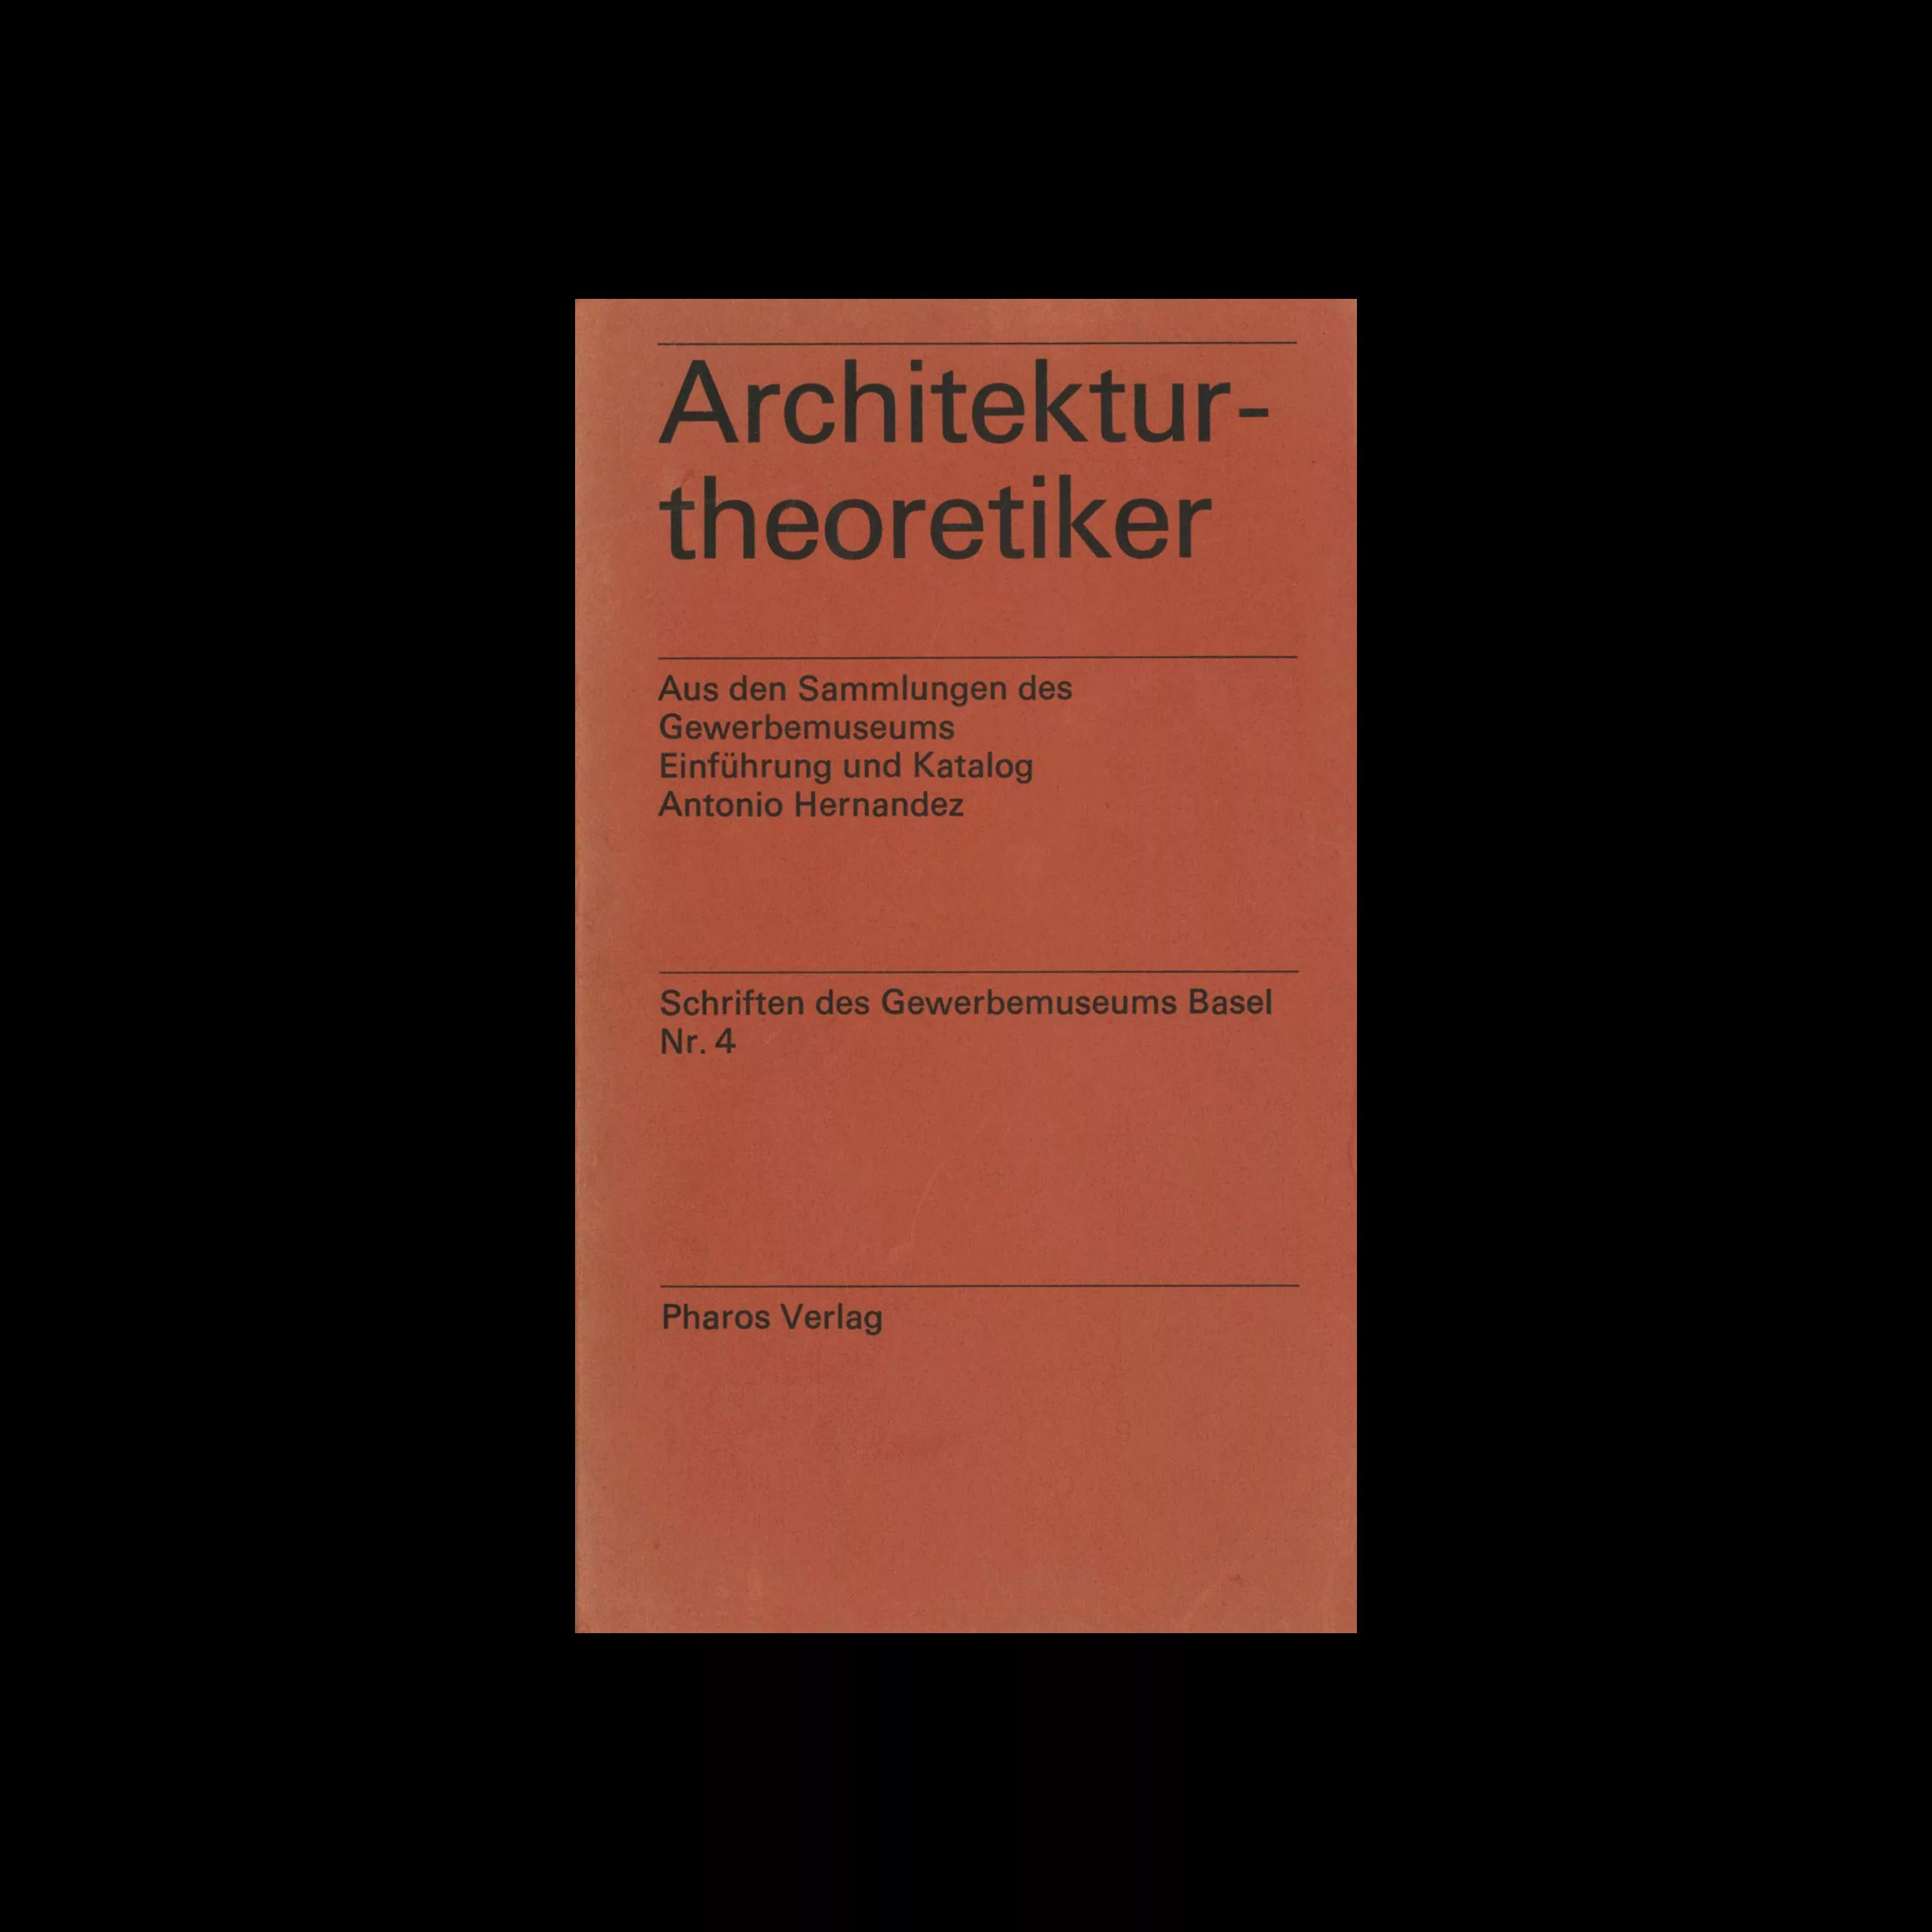 Architektur-theoretiker, Basel School of Arts and Crafts, Nr.4, 1967. Designed by Emil Ruder